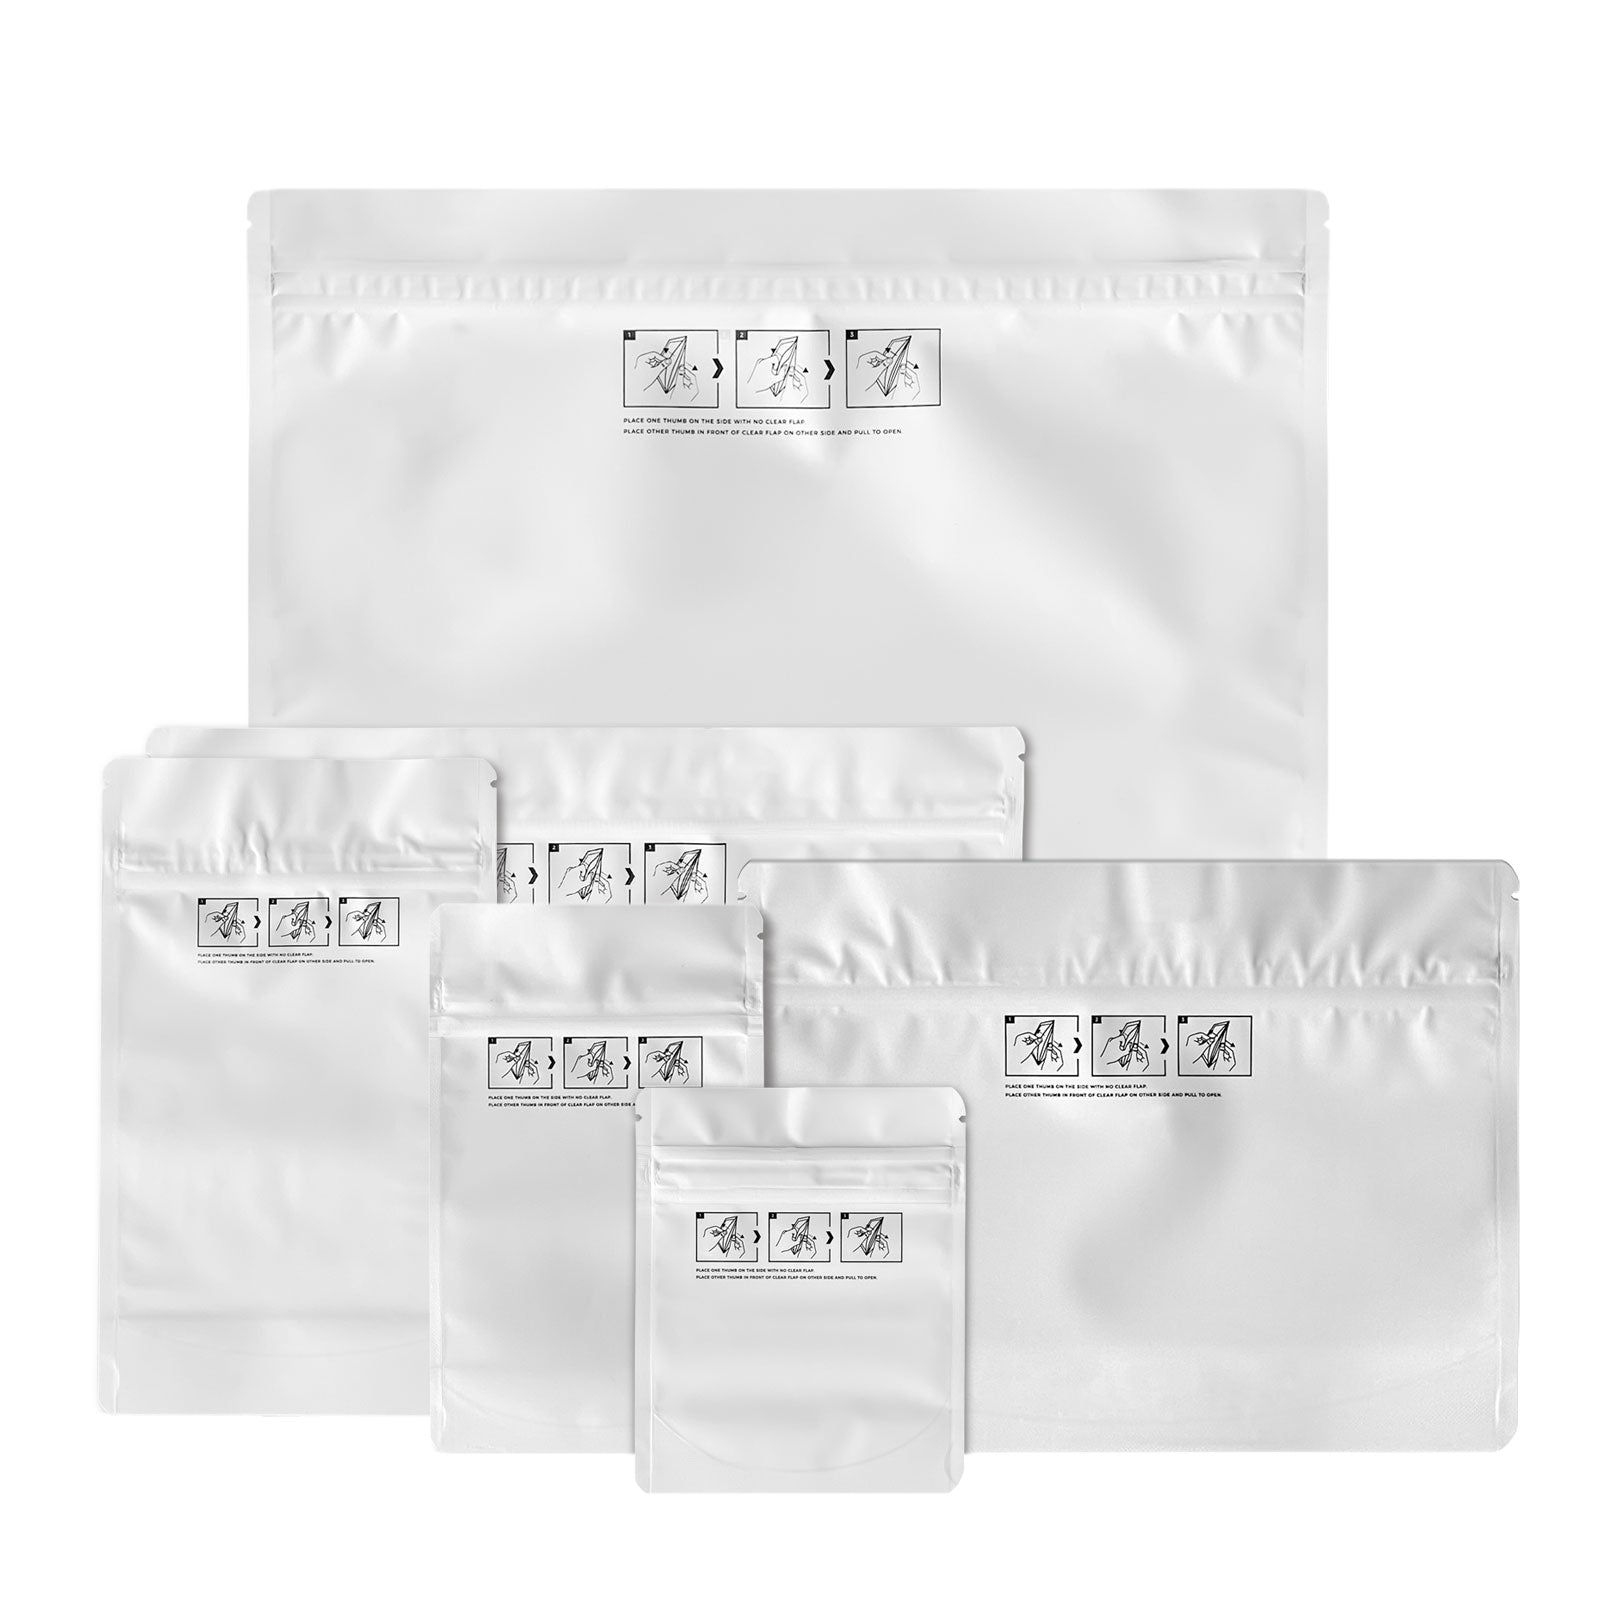 8"x6" Medium Child Resistant Exit Bags All White - 100 Count